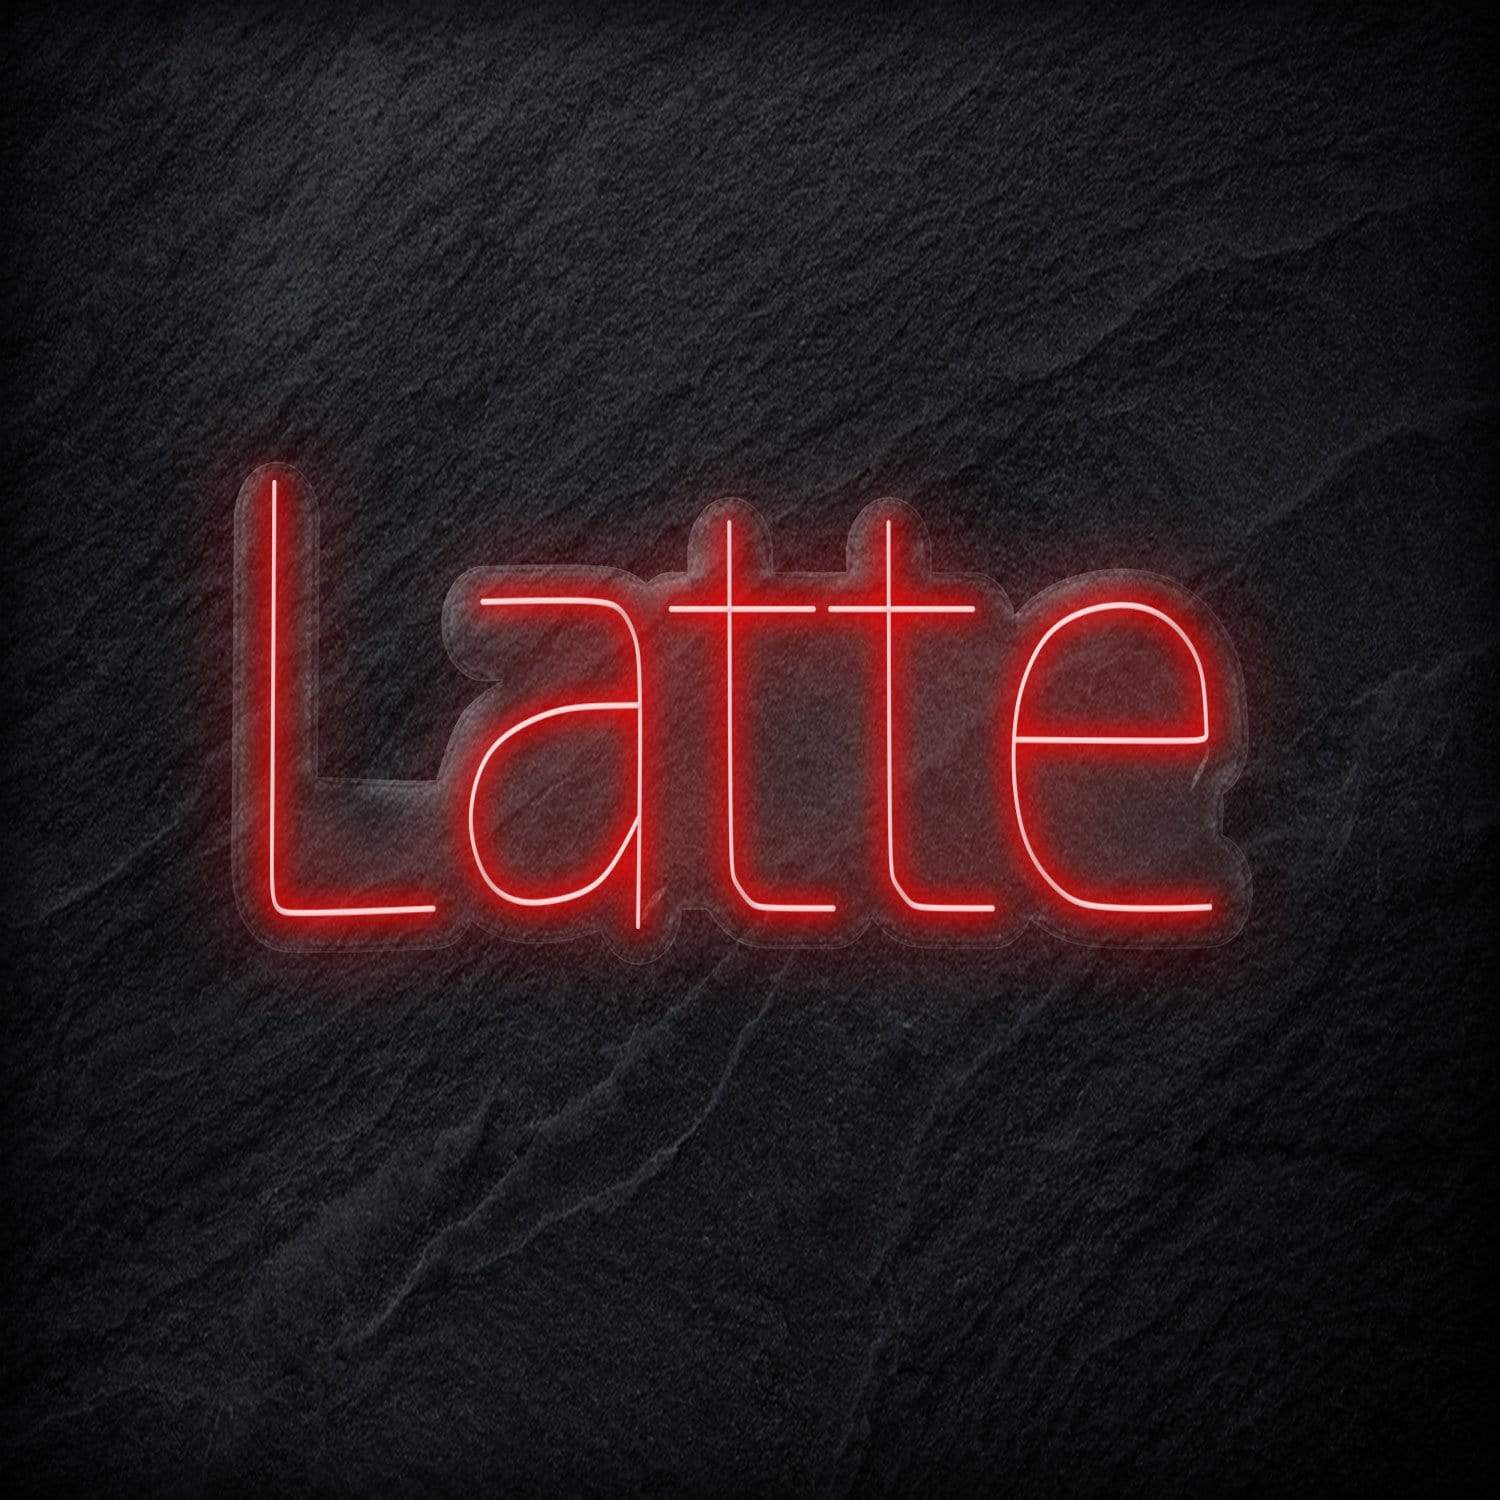 "Latte Coffee" LED  Neon Schriftzug - NEONEVERGLOW